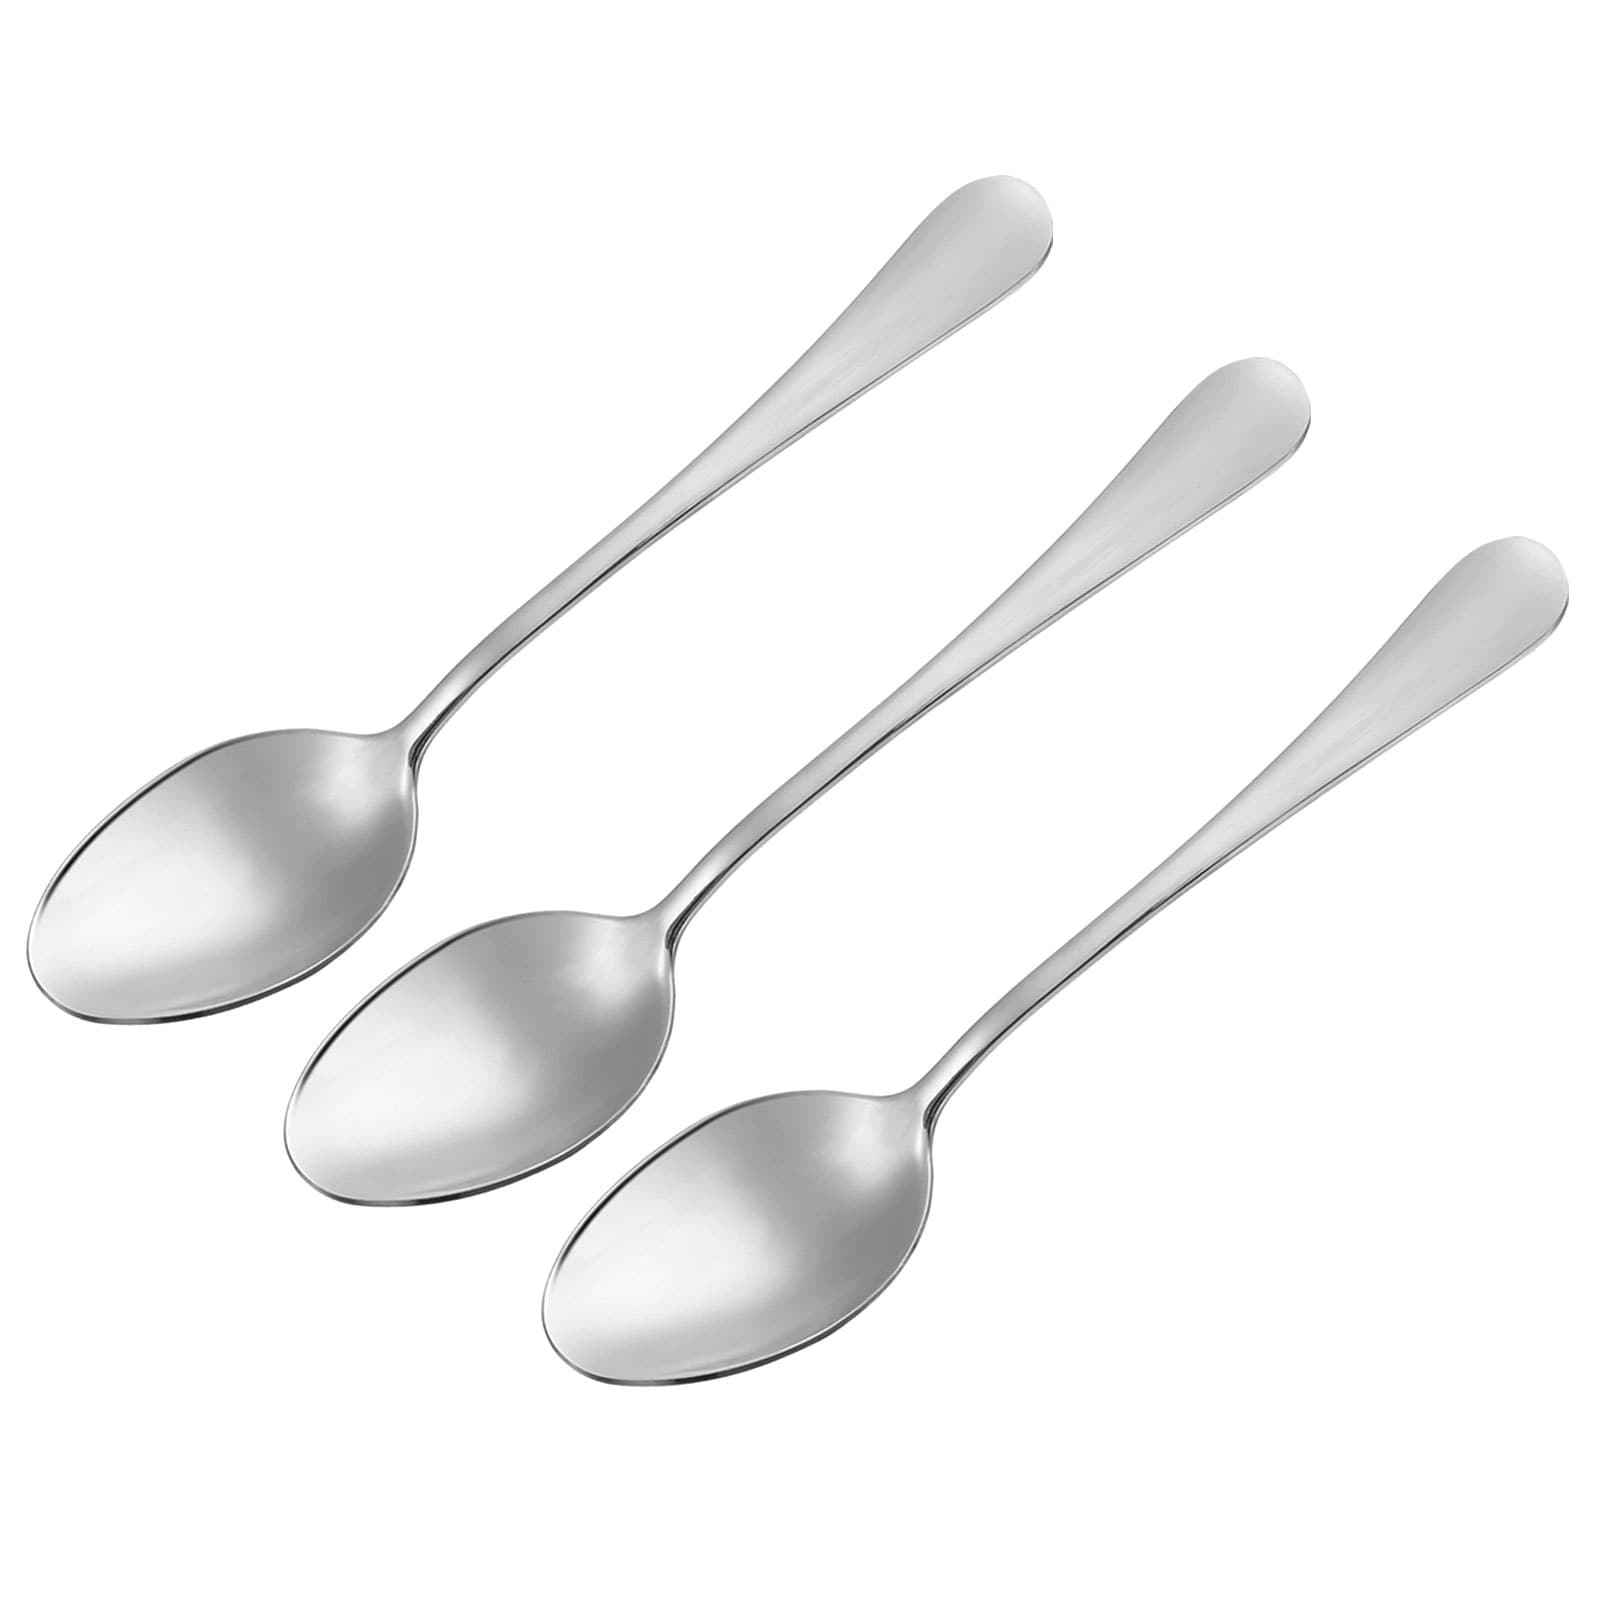 10Pcs Kids Fork and Spoon Set 410 Stainless Steel Kids Silverware